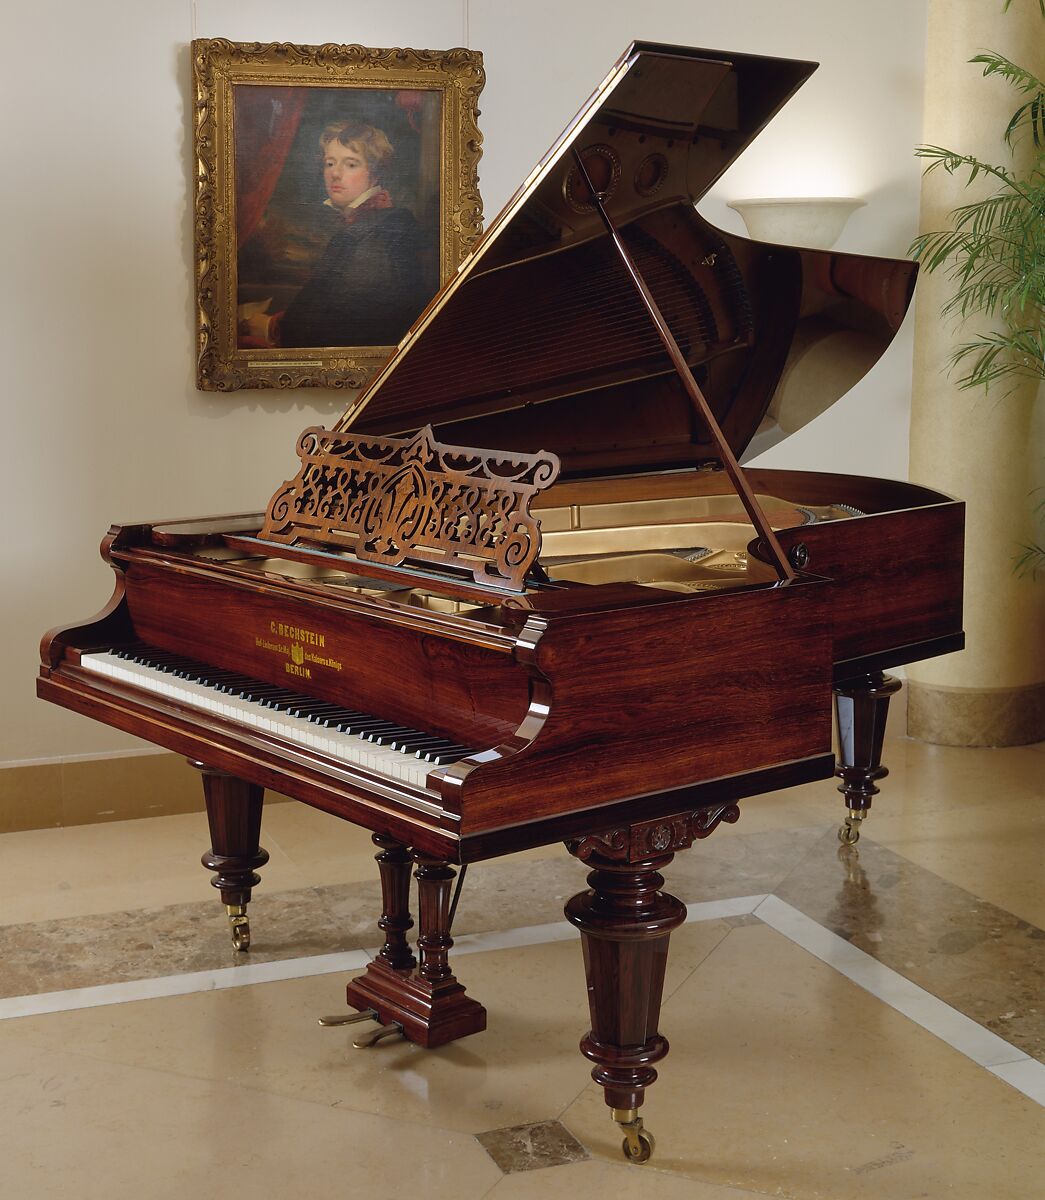 Carl Bechstein, Grand Piano, German